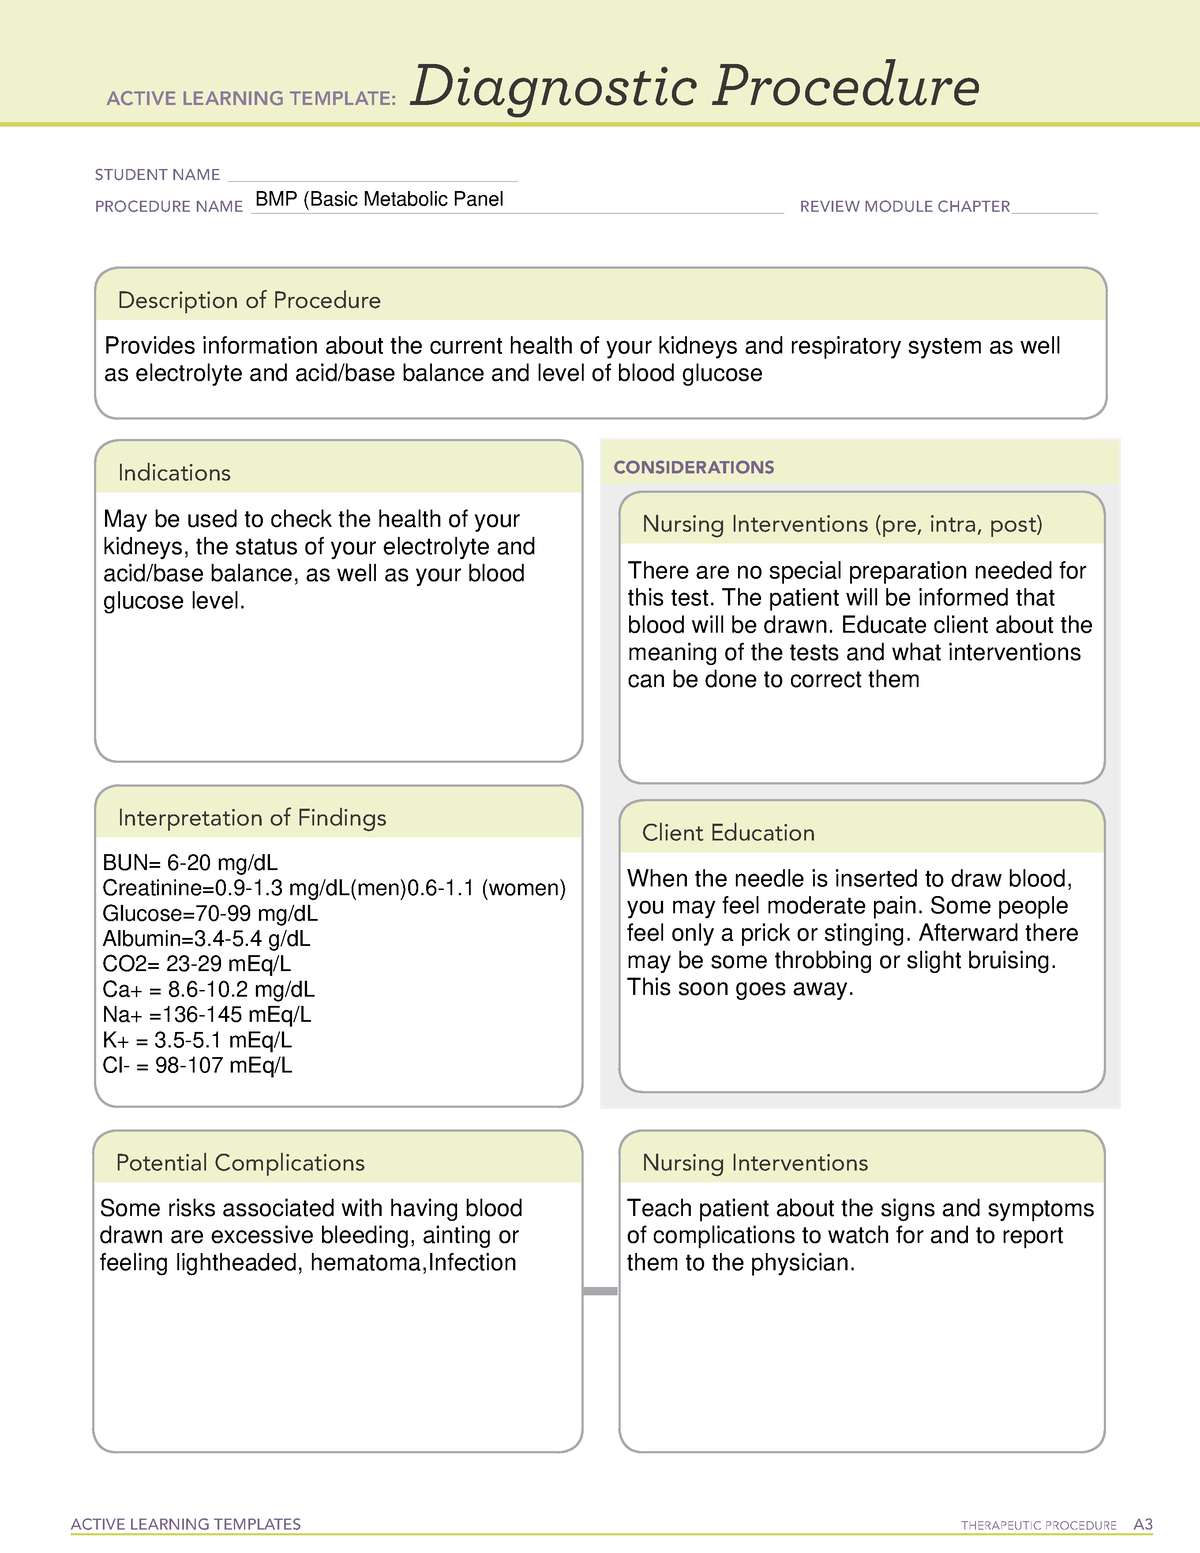 ATI BMP Diagnostic Procedure Sheet ACTIVE LEARNING TEMPLATES